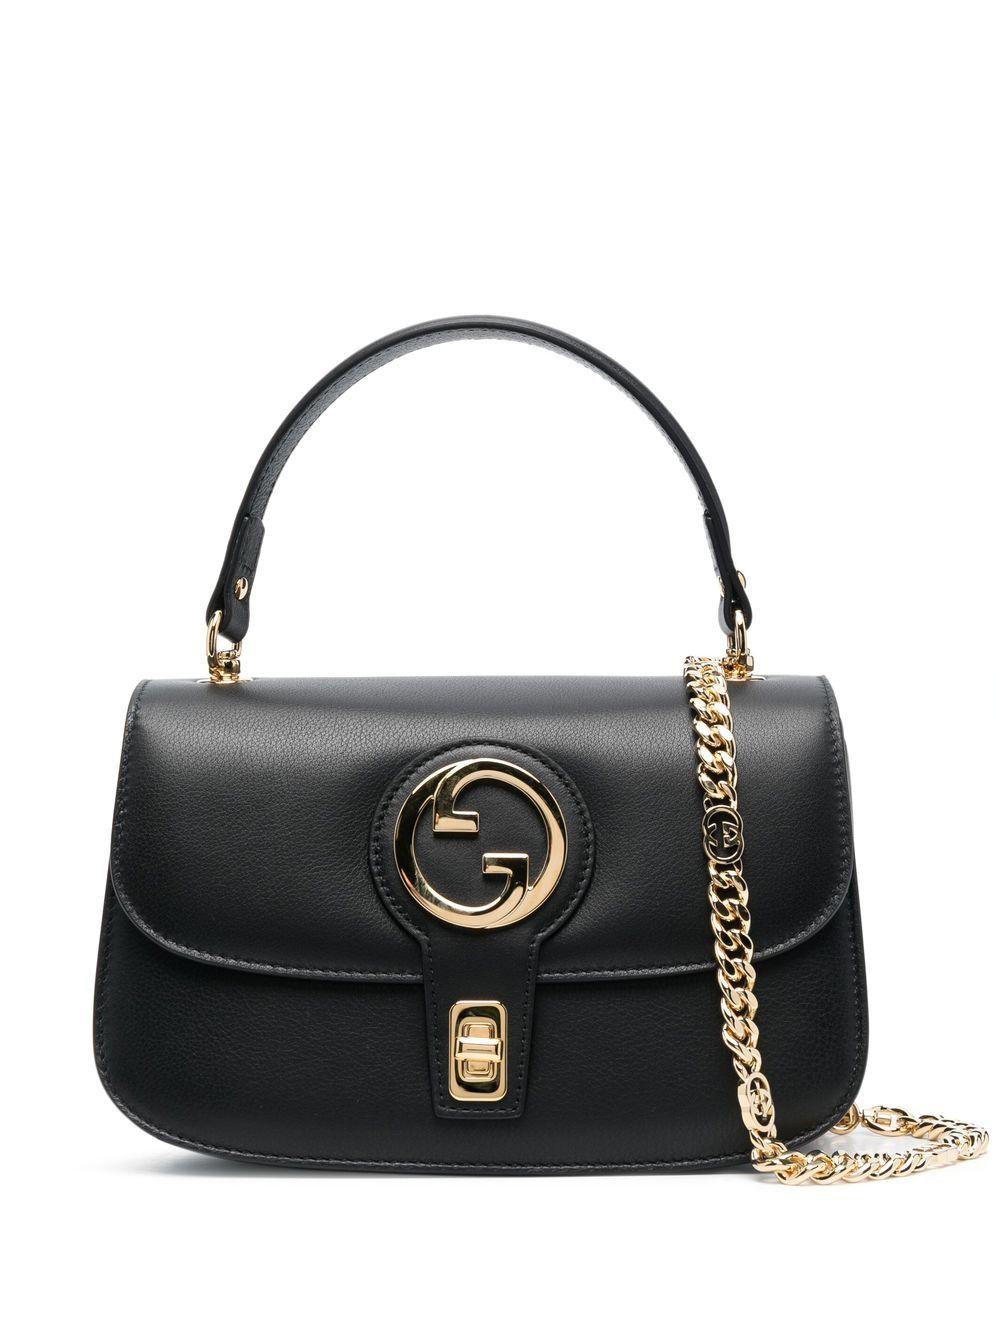 Gucci Blondie Leather Tote Bag in Black | Lyst